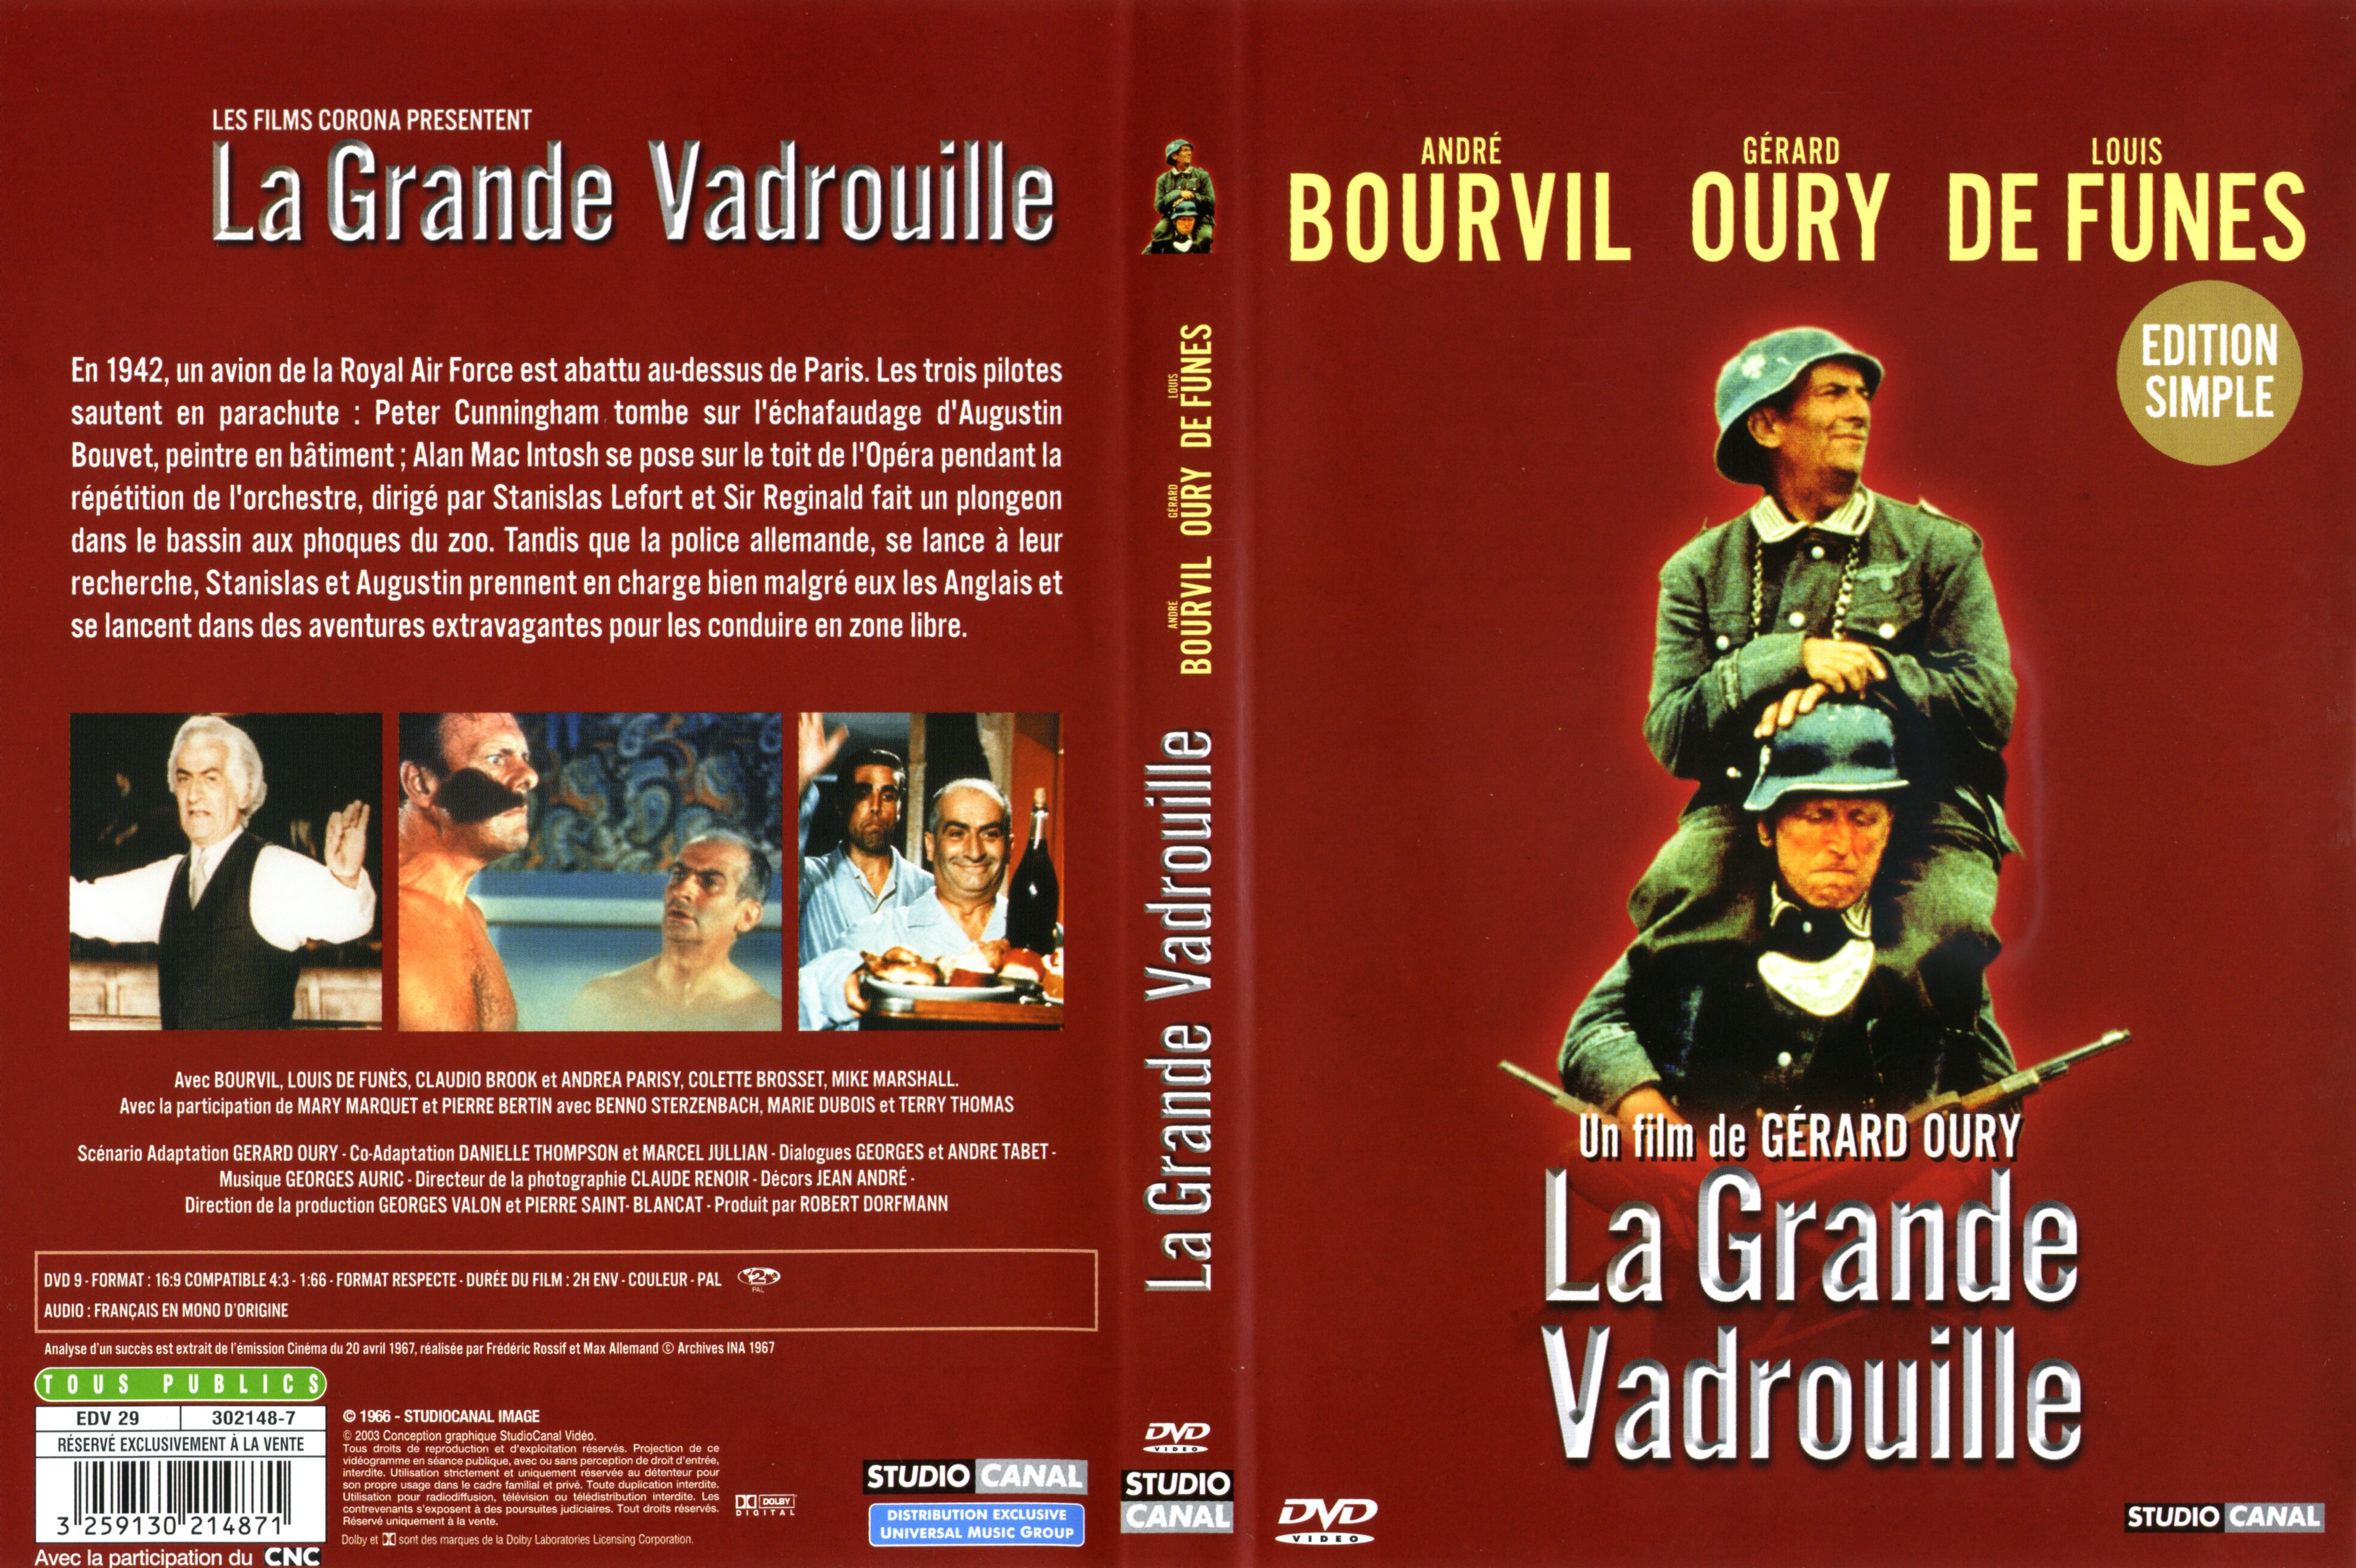 Jaquette DVD La grande vadrouille v2